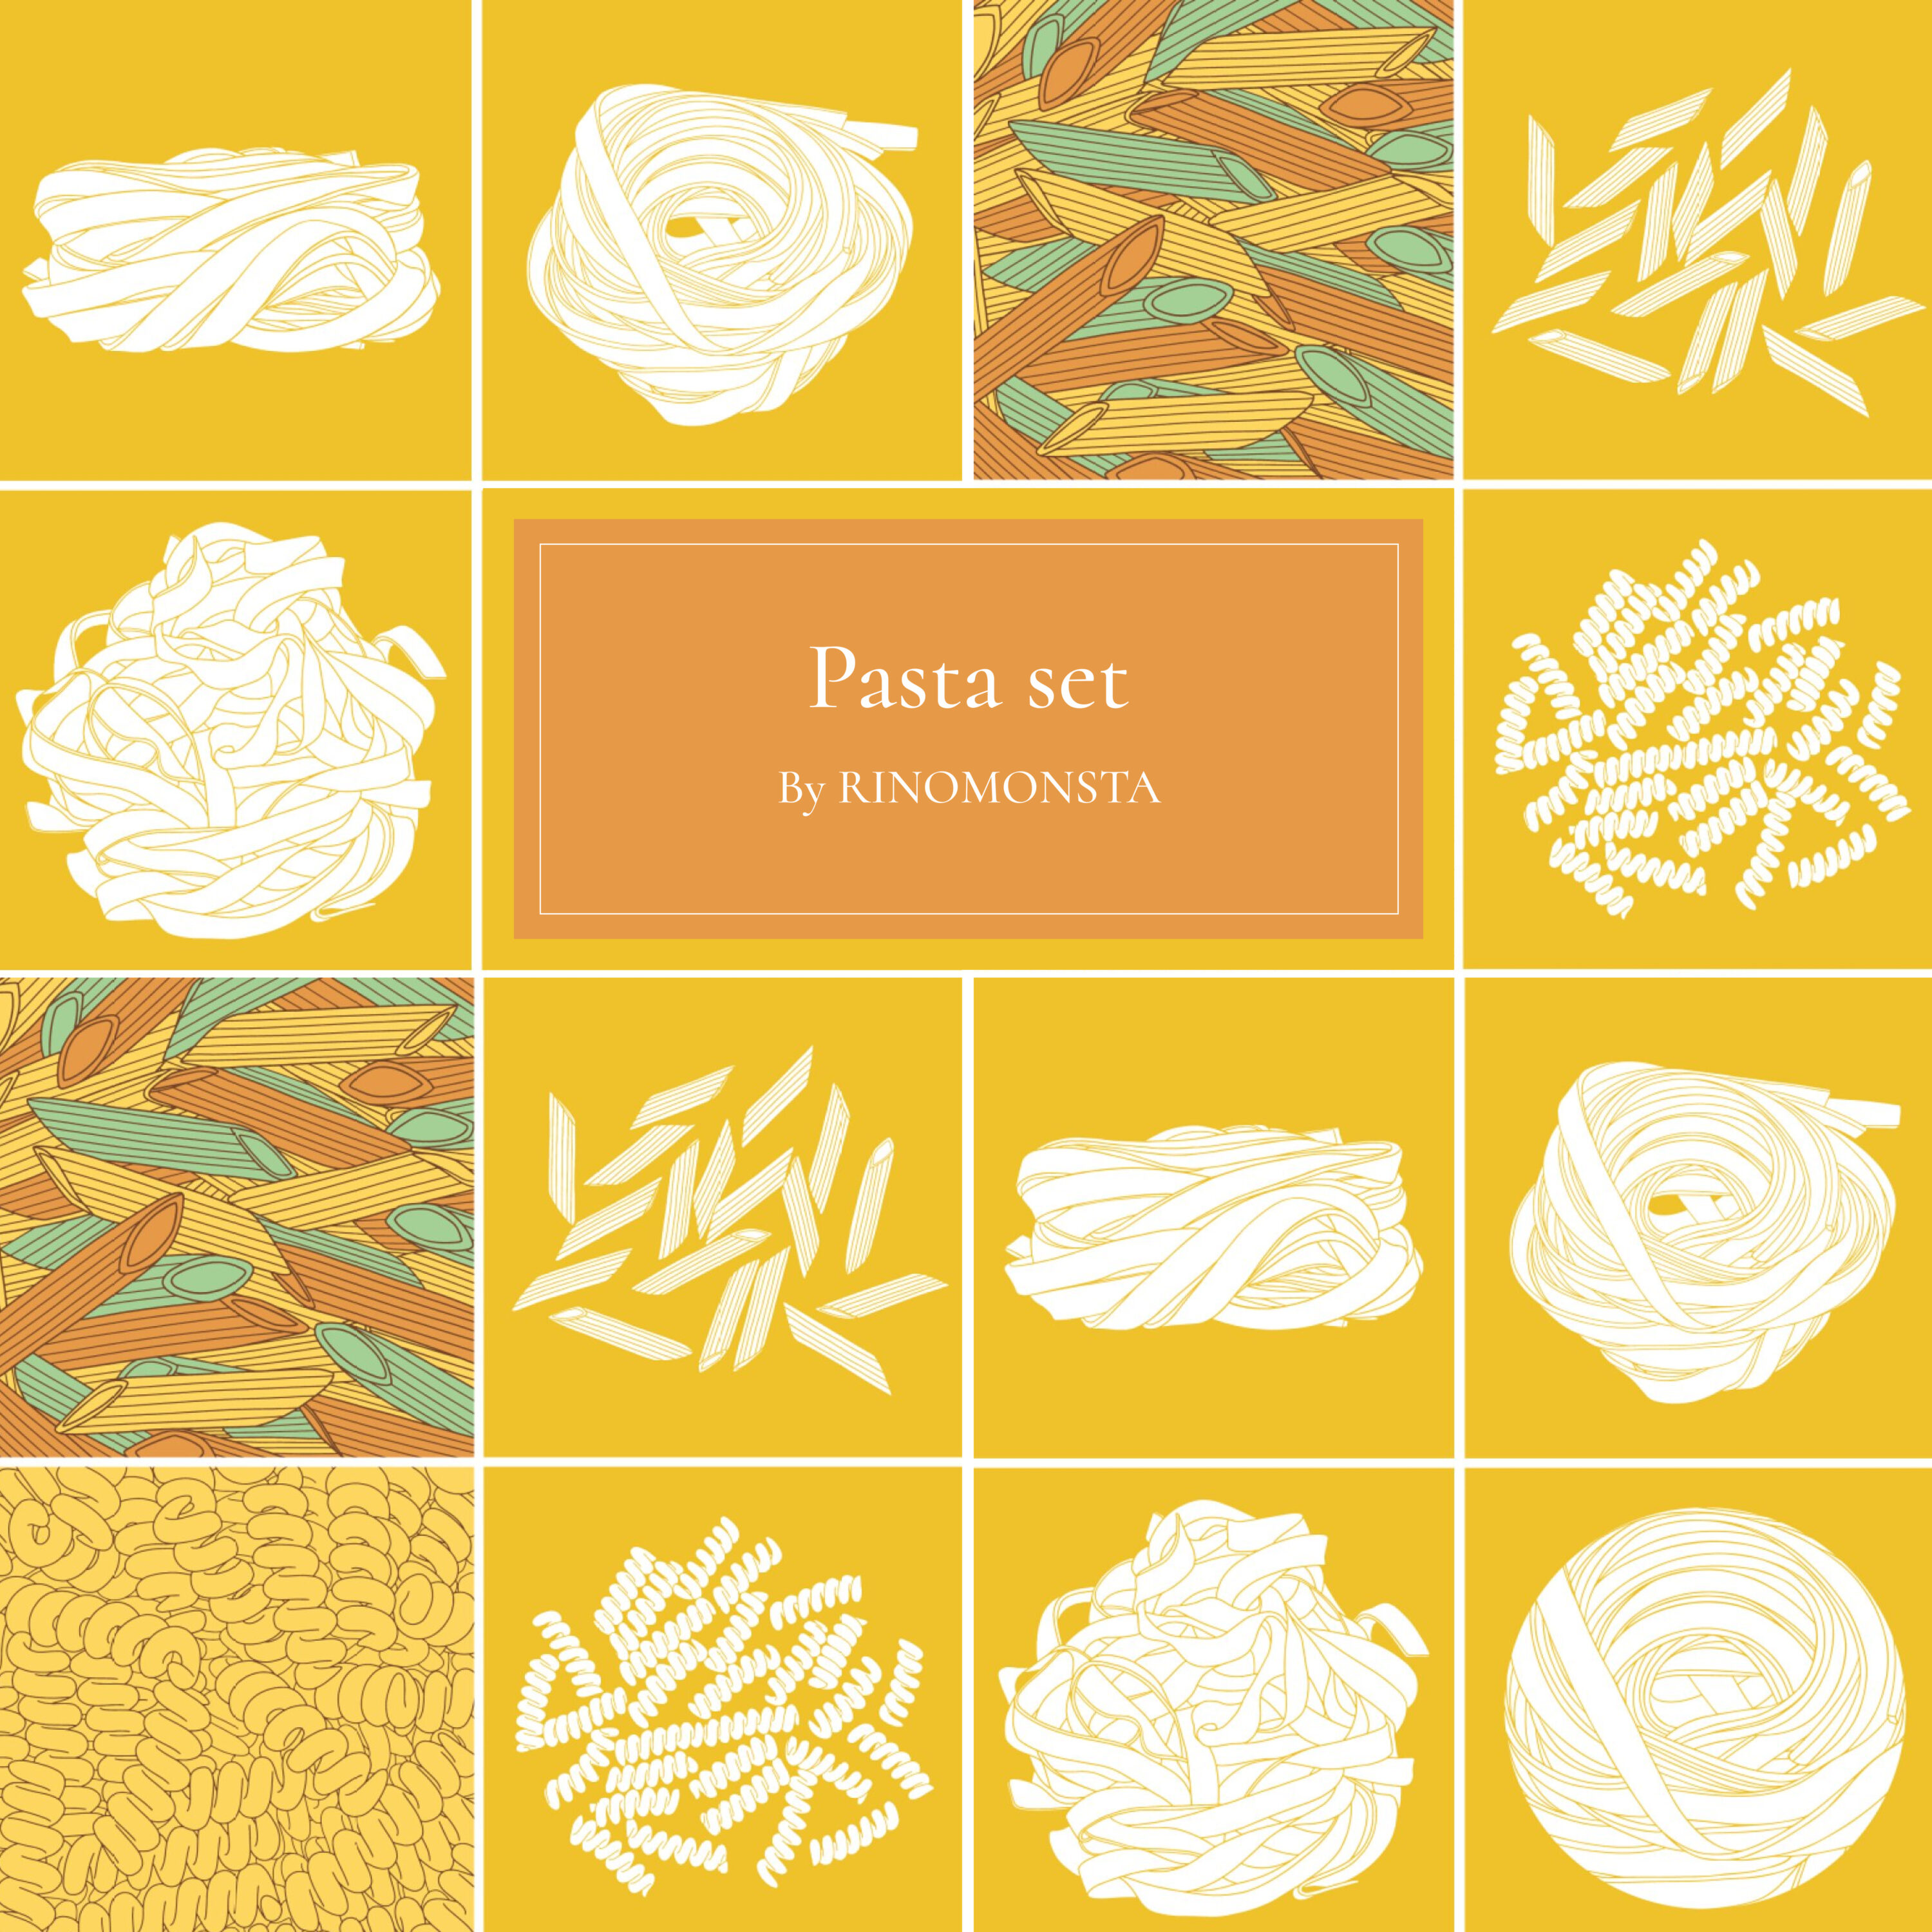 Prints of pasta set.